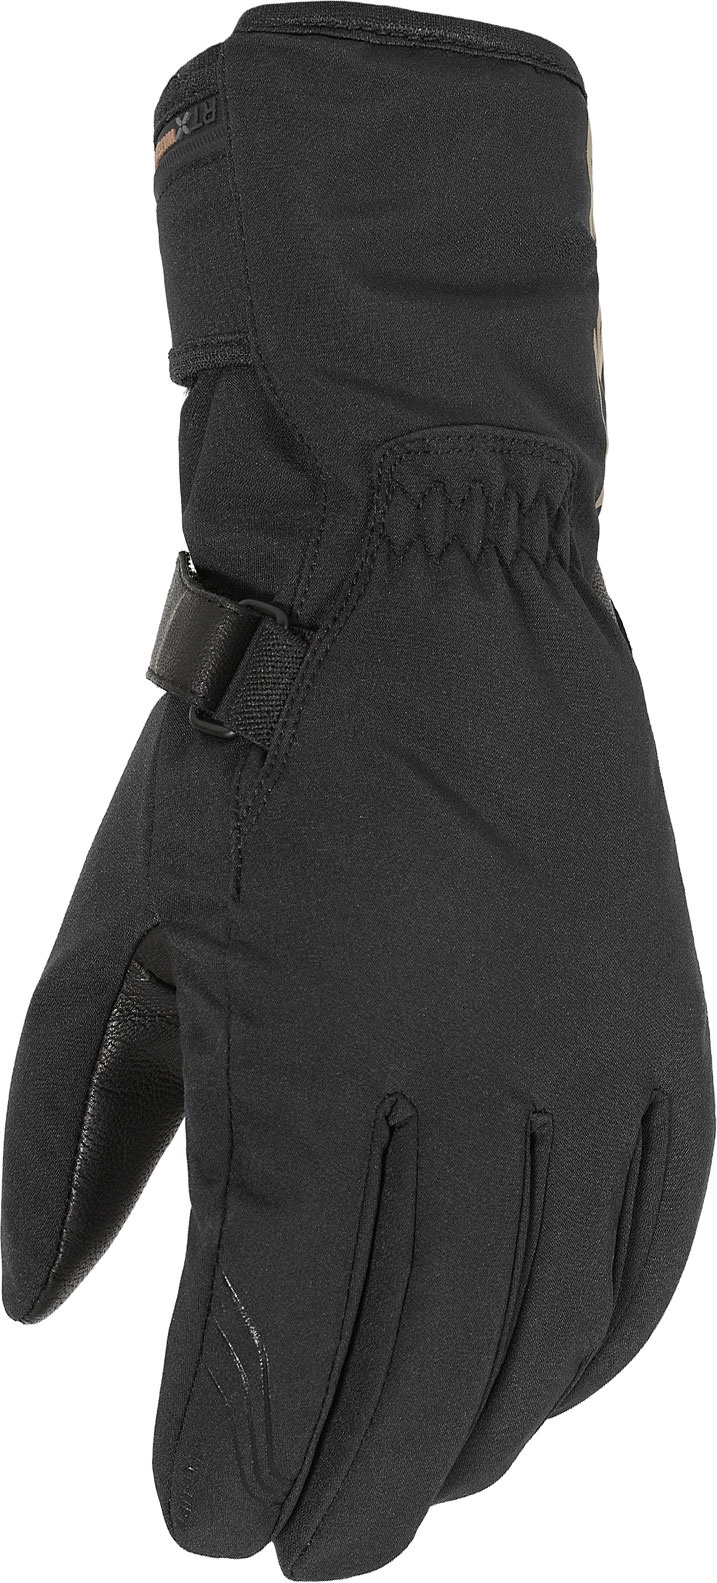 Macna Tigo RTX Evo, gants imperméables pour femmes - Noir - M